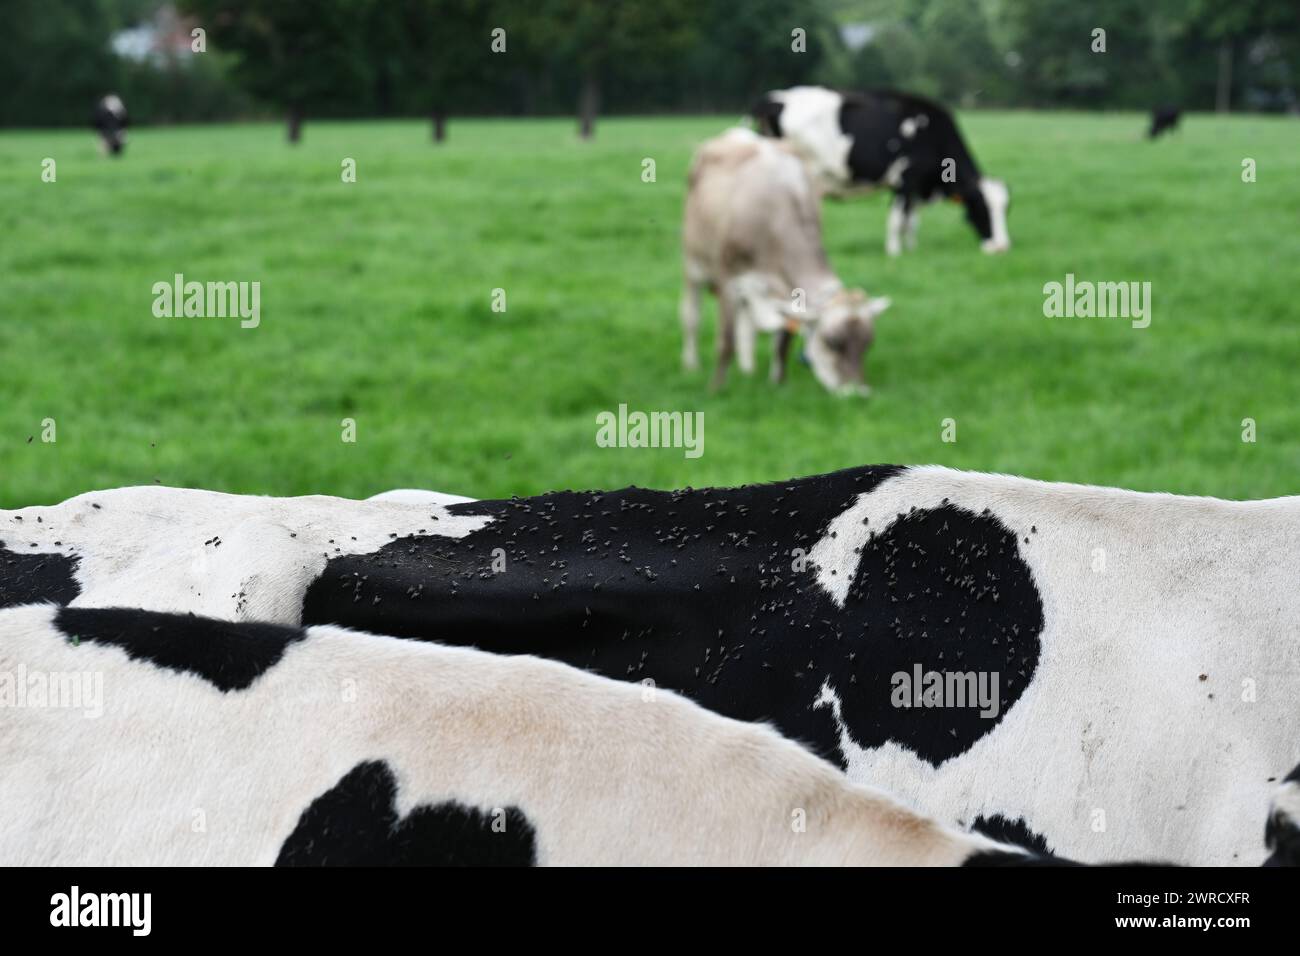 Brachycera on the back of a cow Stock Photo